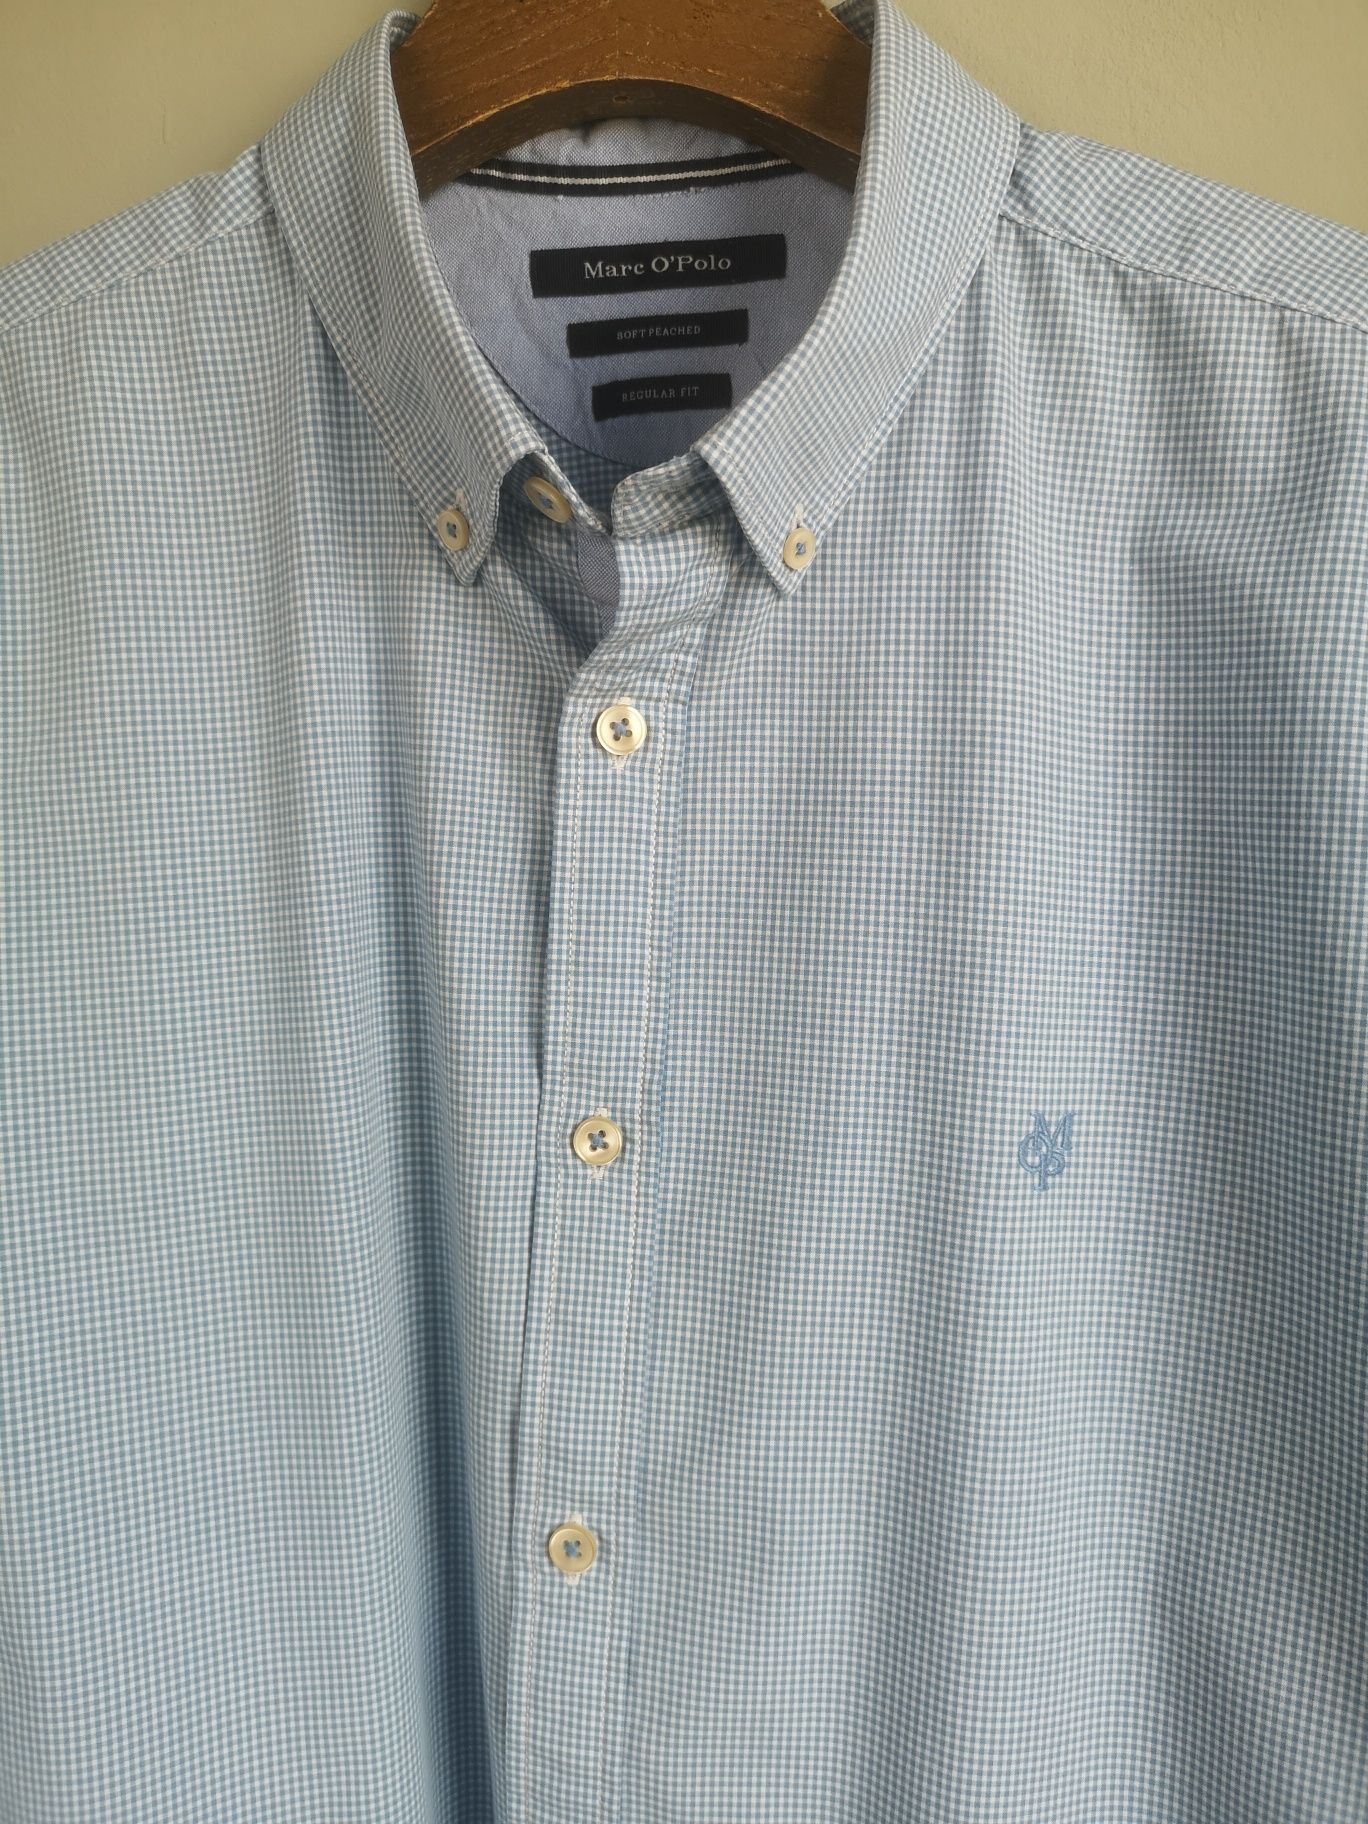 MARC O'POLO, памучна риза, размер XL